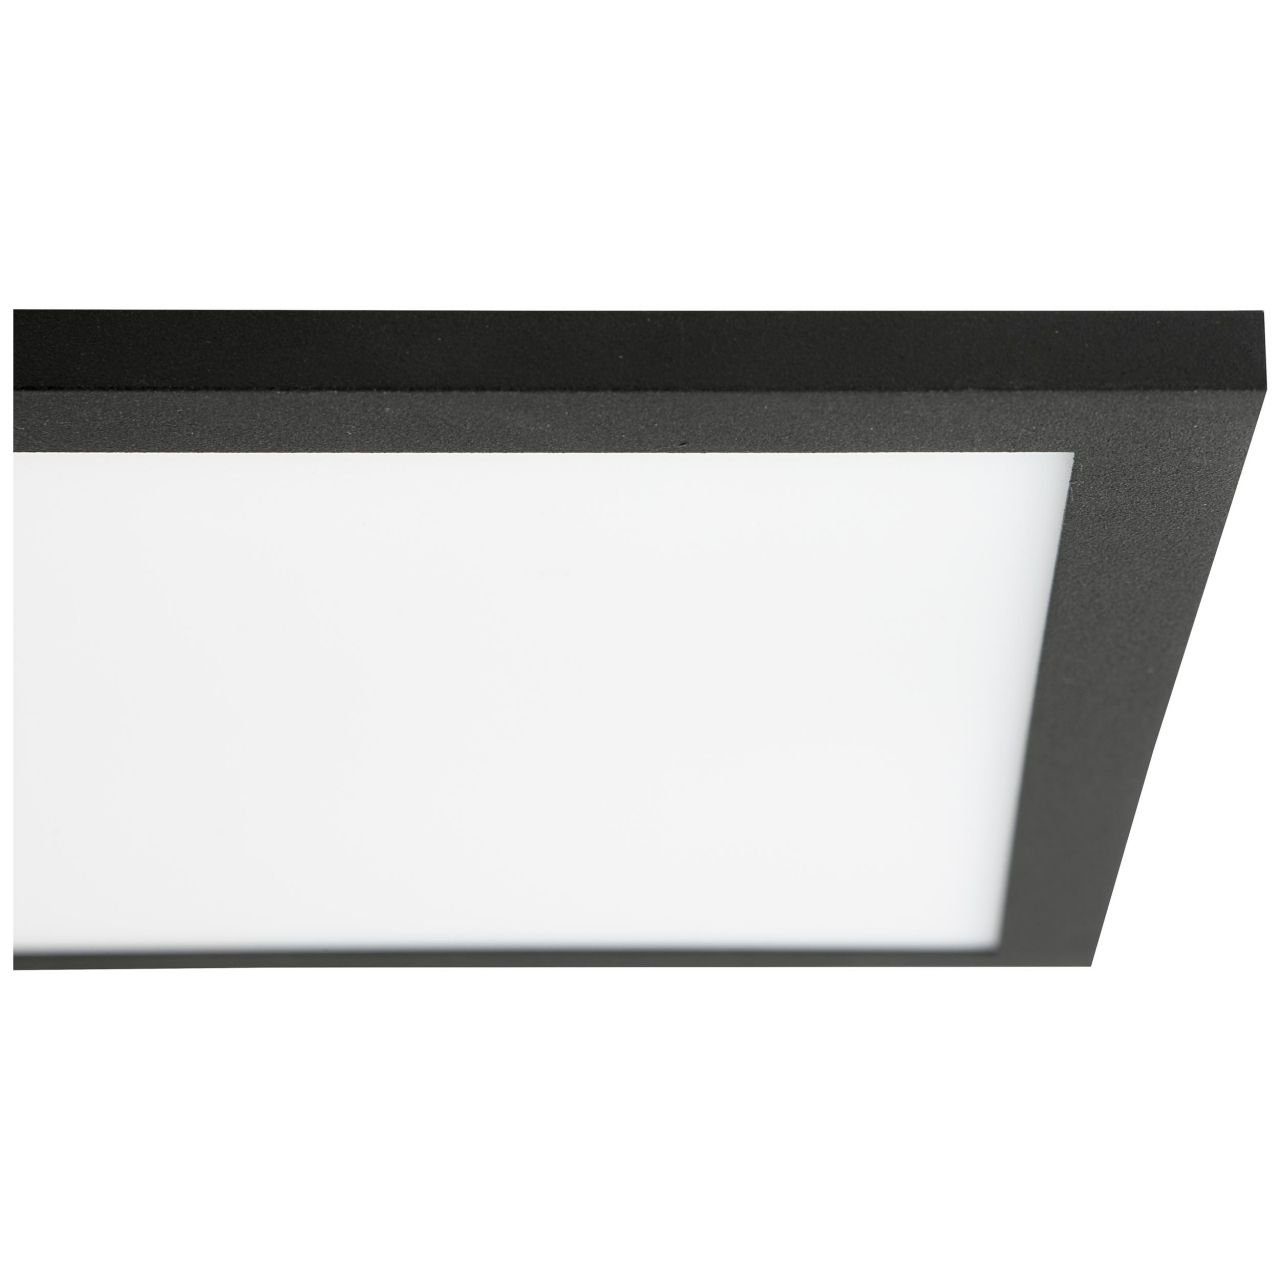 Brilliant LED Panel Buffi, LED wechselbar, Neutralweiß, 120 x 30 cm, 4000  lm, kaltweiß, Metall/Kunststoff, sand schwarz